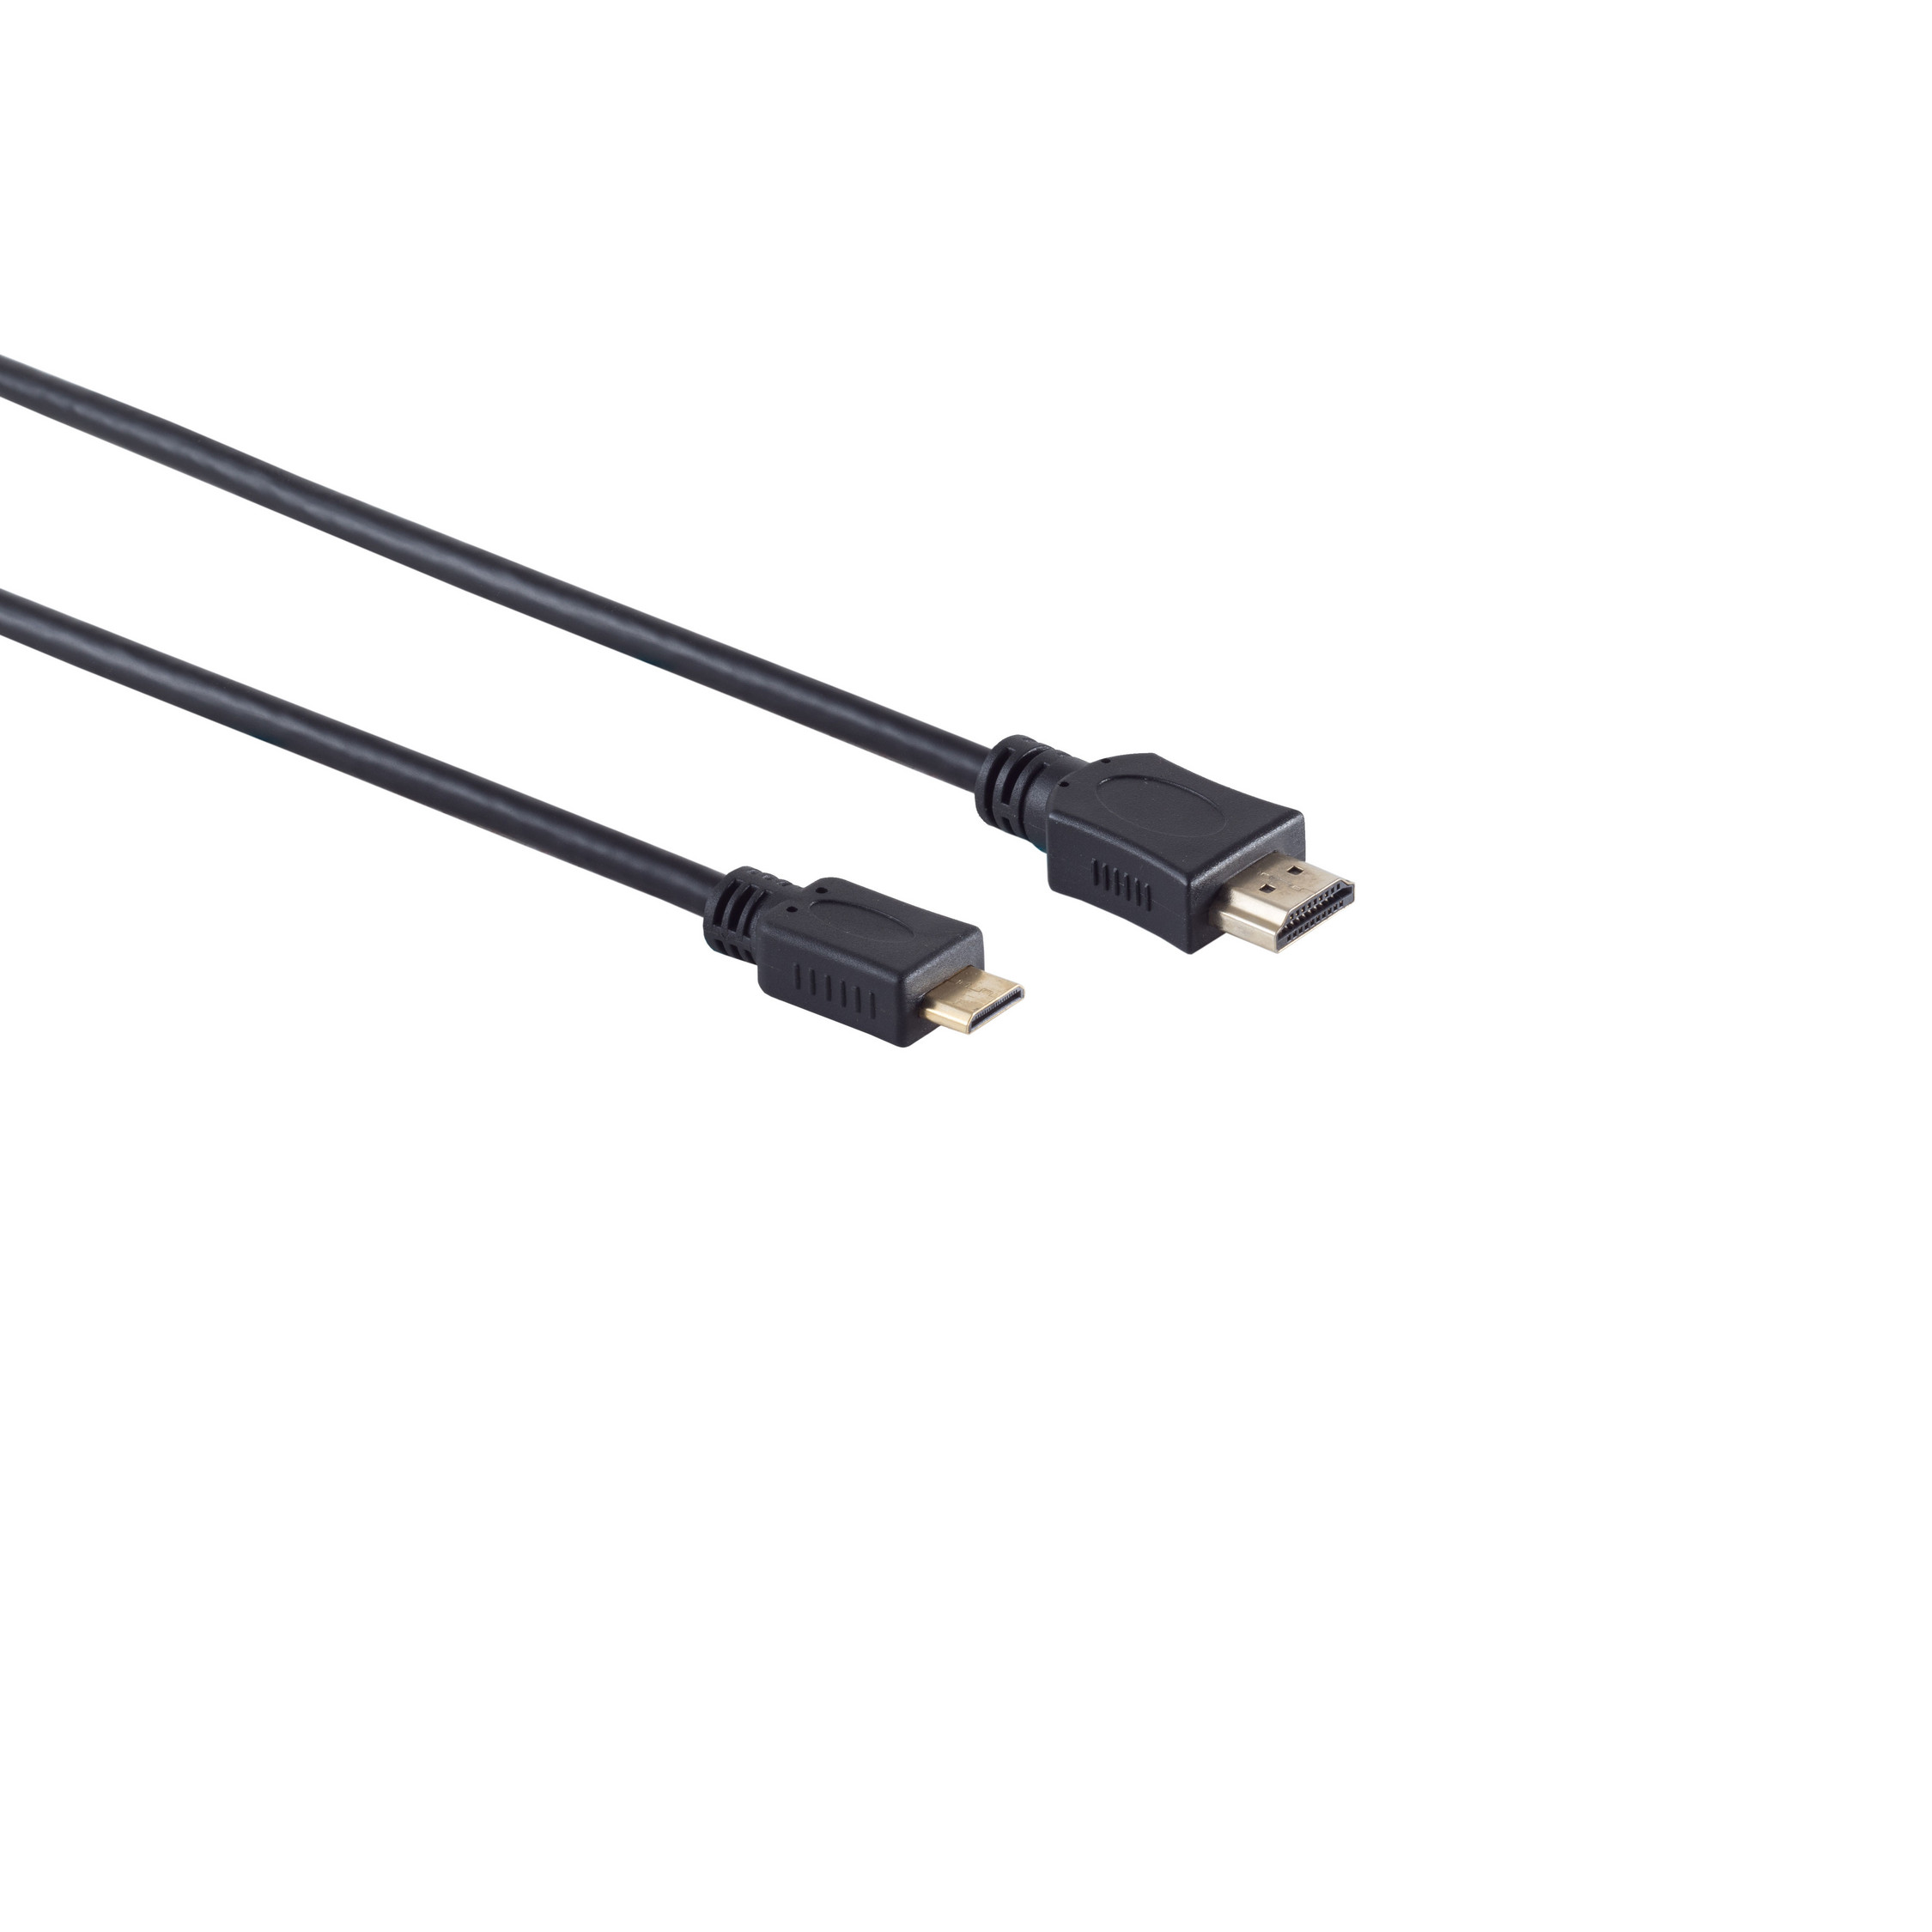 A-Stecker HDMI / HDMI KABELBUDE C-Stecker Kabel 2m verg. HEAC HDMI